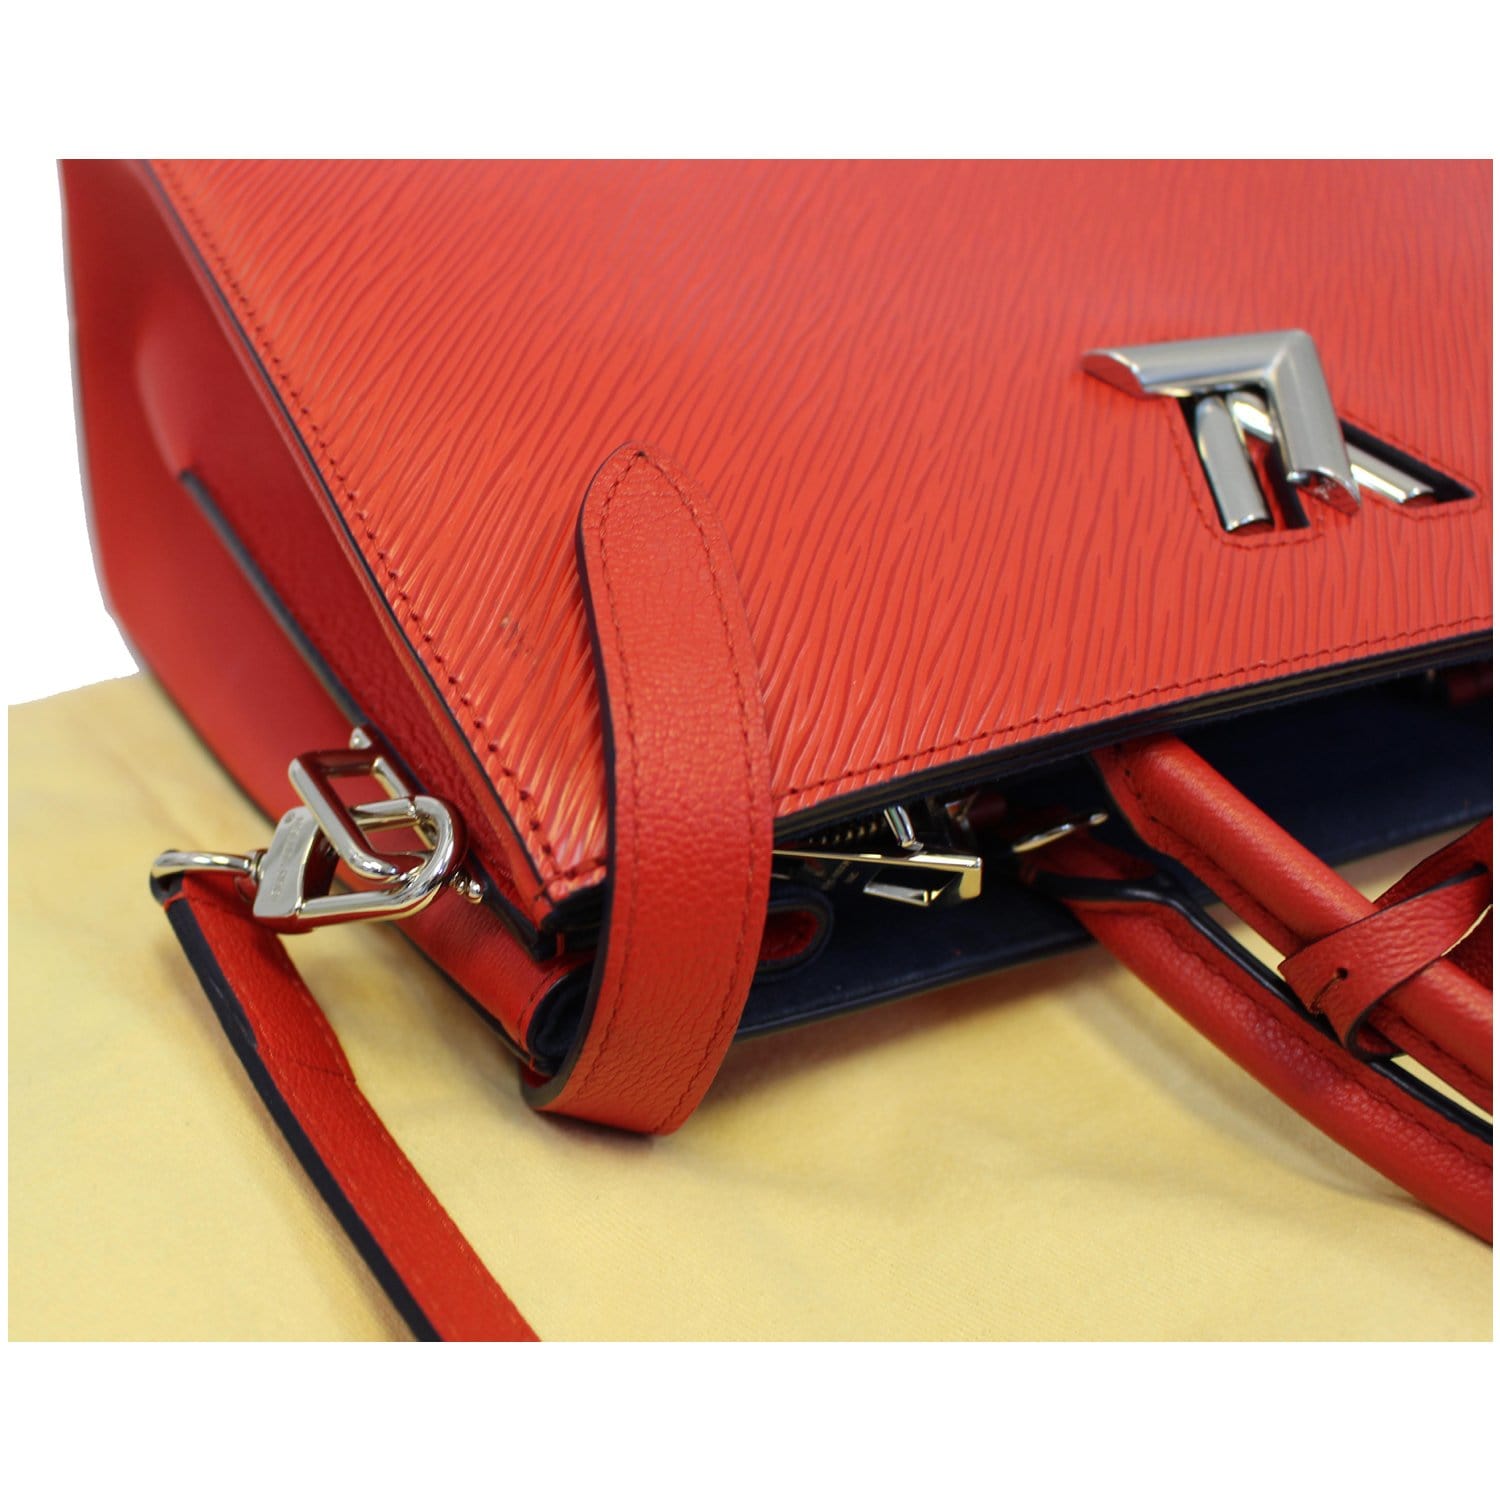 Louis Vuitton Red Epi Stud Limited Edition Twist MM Bag – I MISS